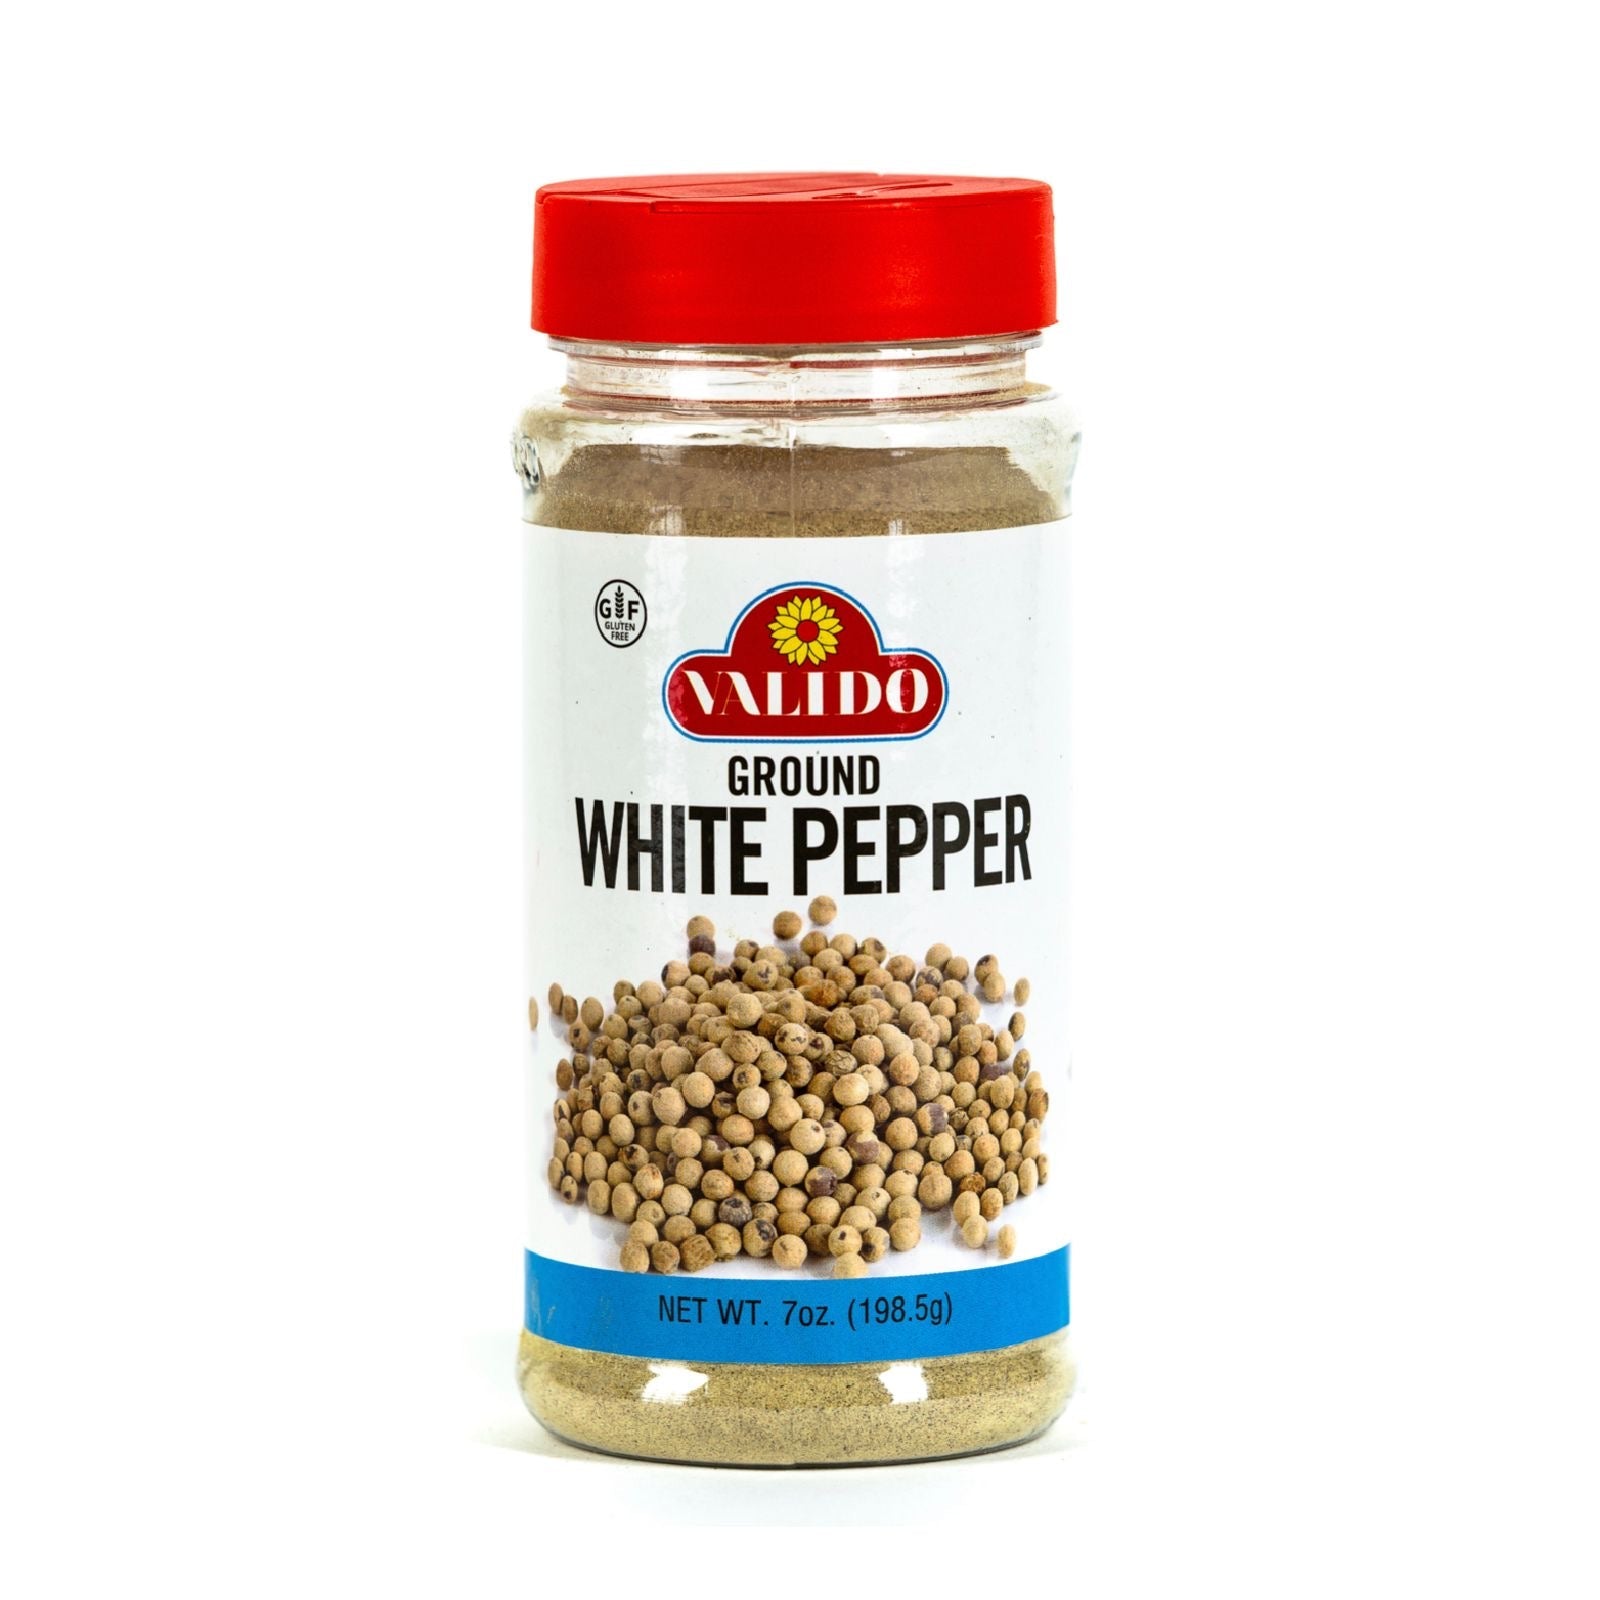 Valido Ground White Pepper - Break Stop